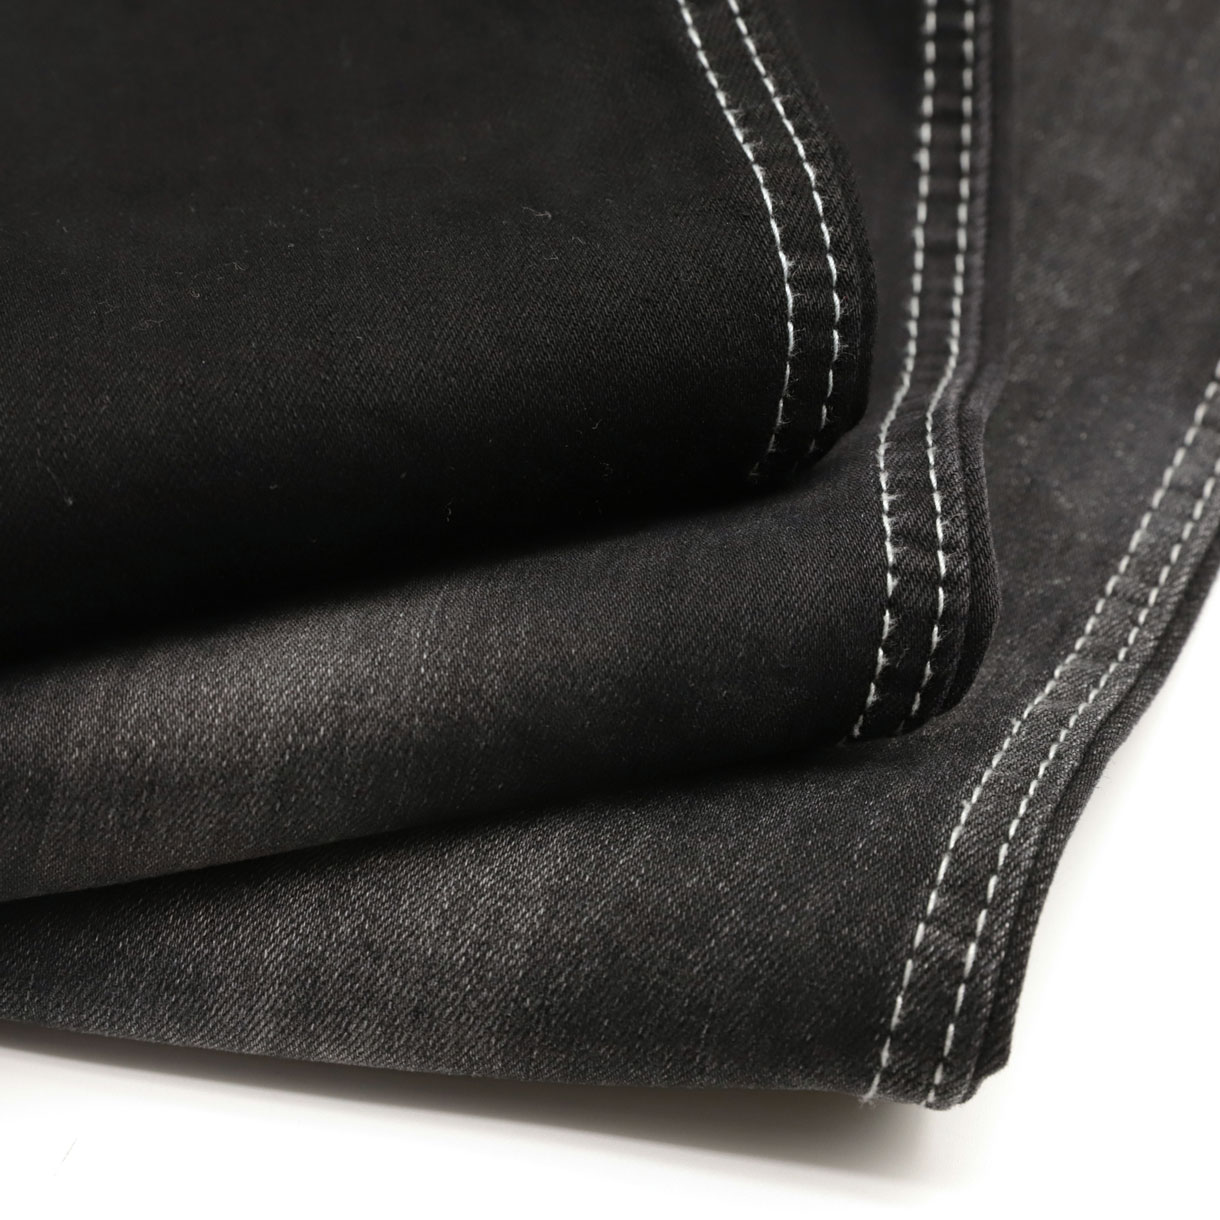 Top 5 High Stretch Denim Fabrics That Make Jeans so Comfortable 2